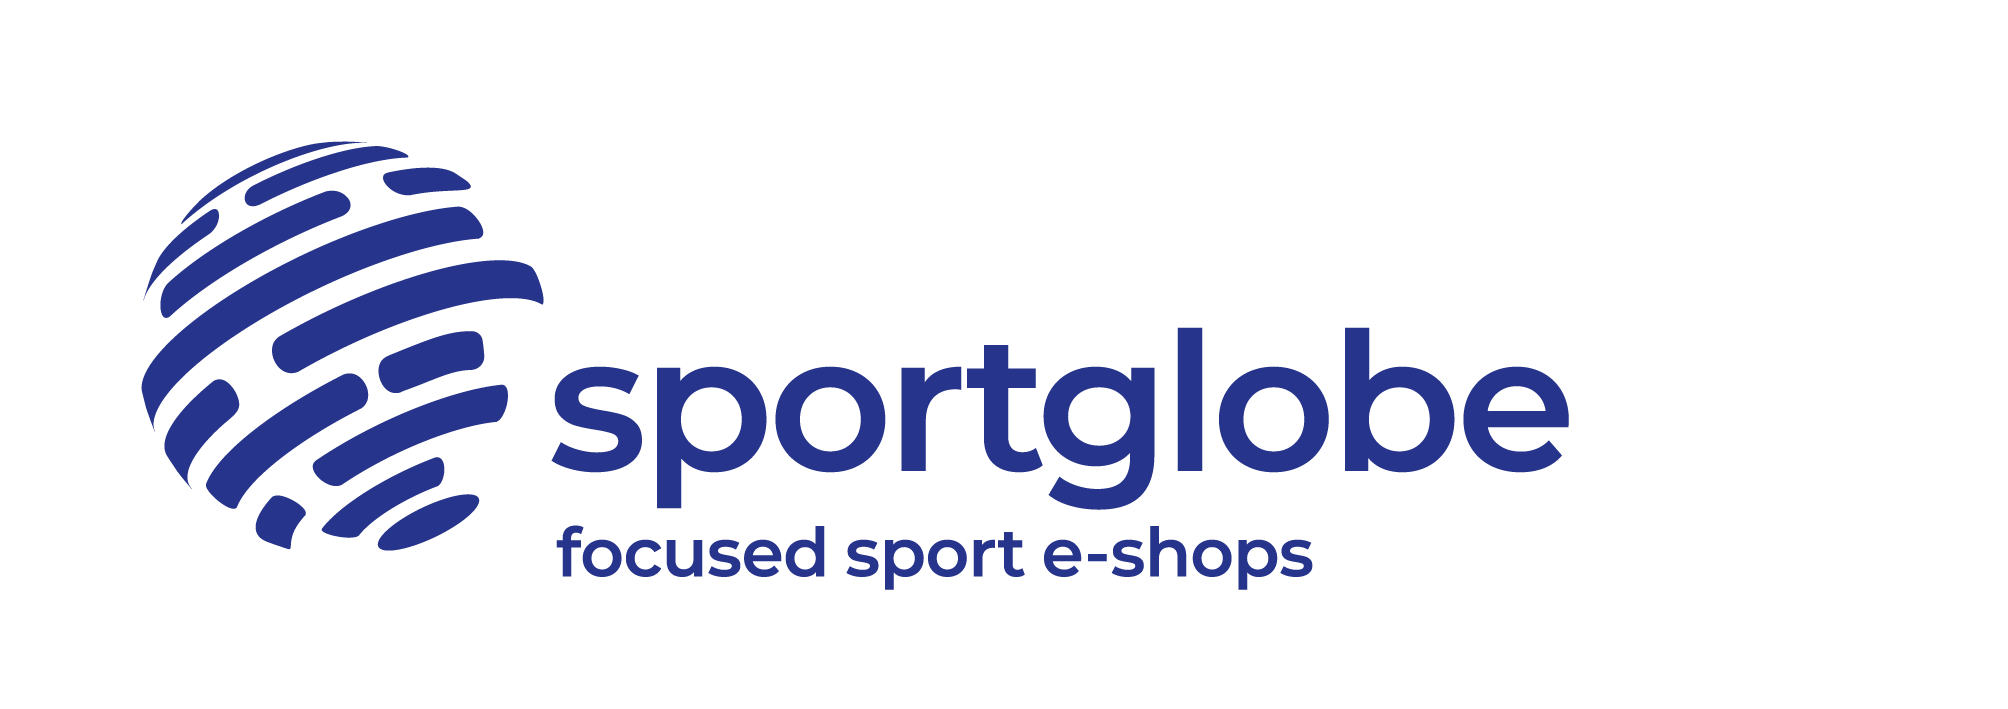 sportglobe Team Logo 2